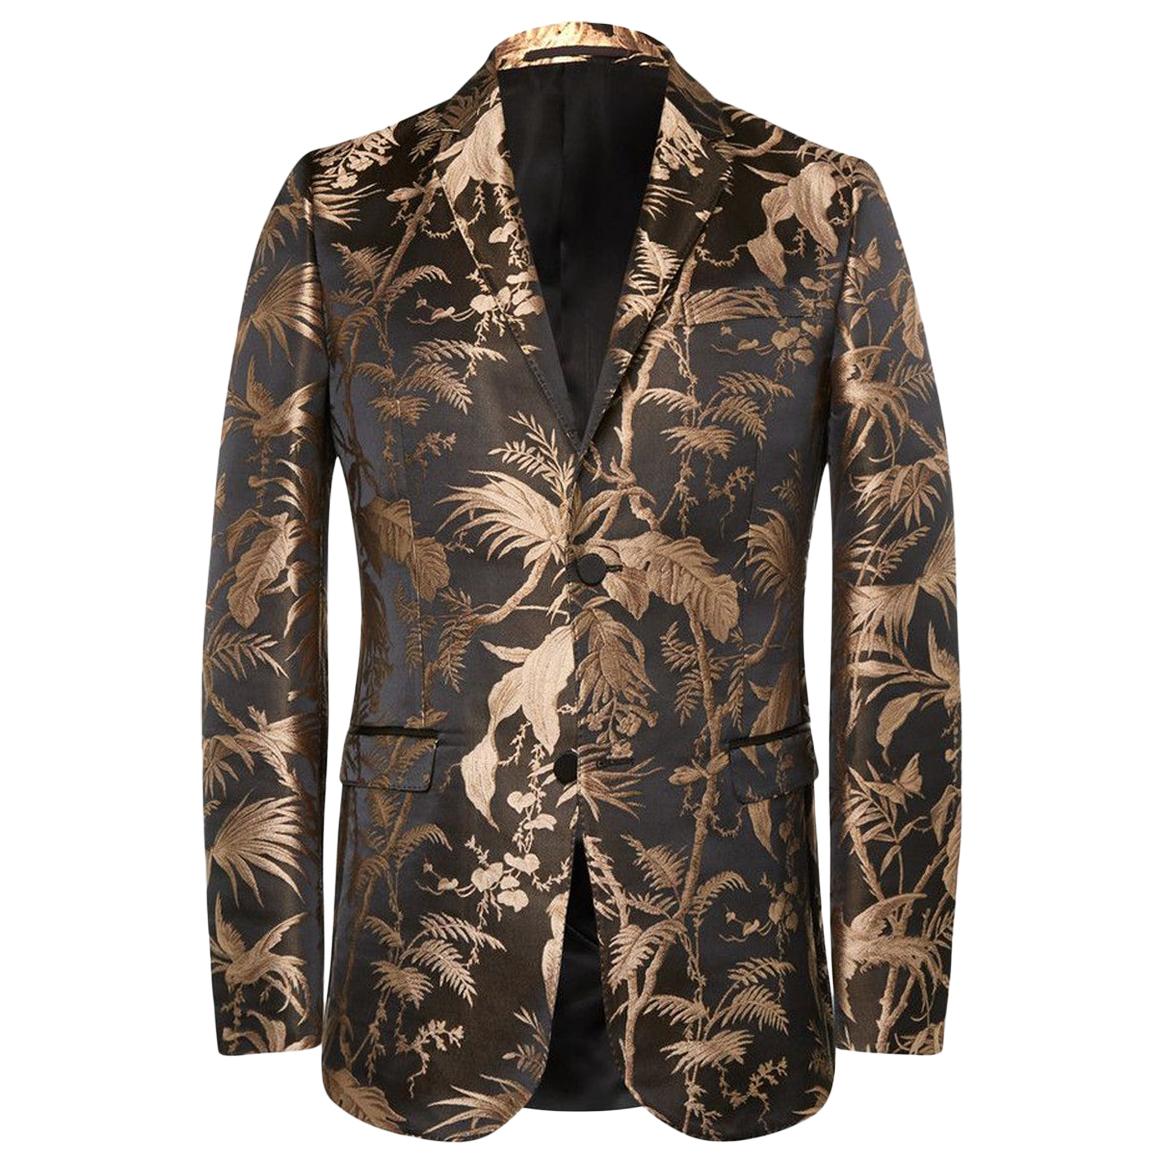 New Gucci Monaco Tropical Jacquard Tuxedo Jacket Italian 48 R  For Sale